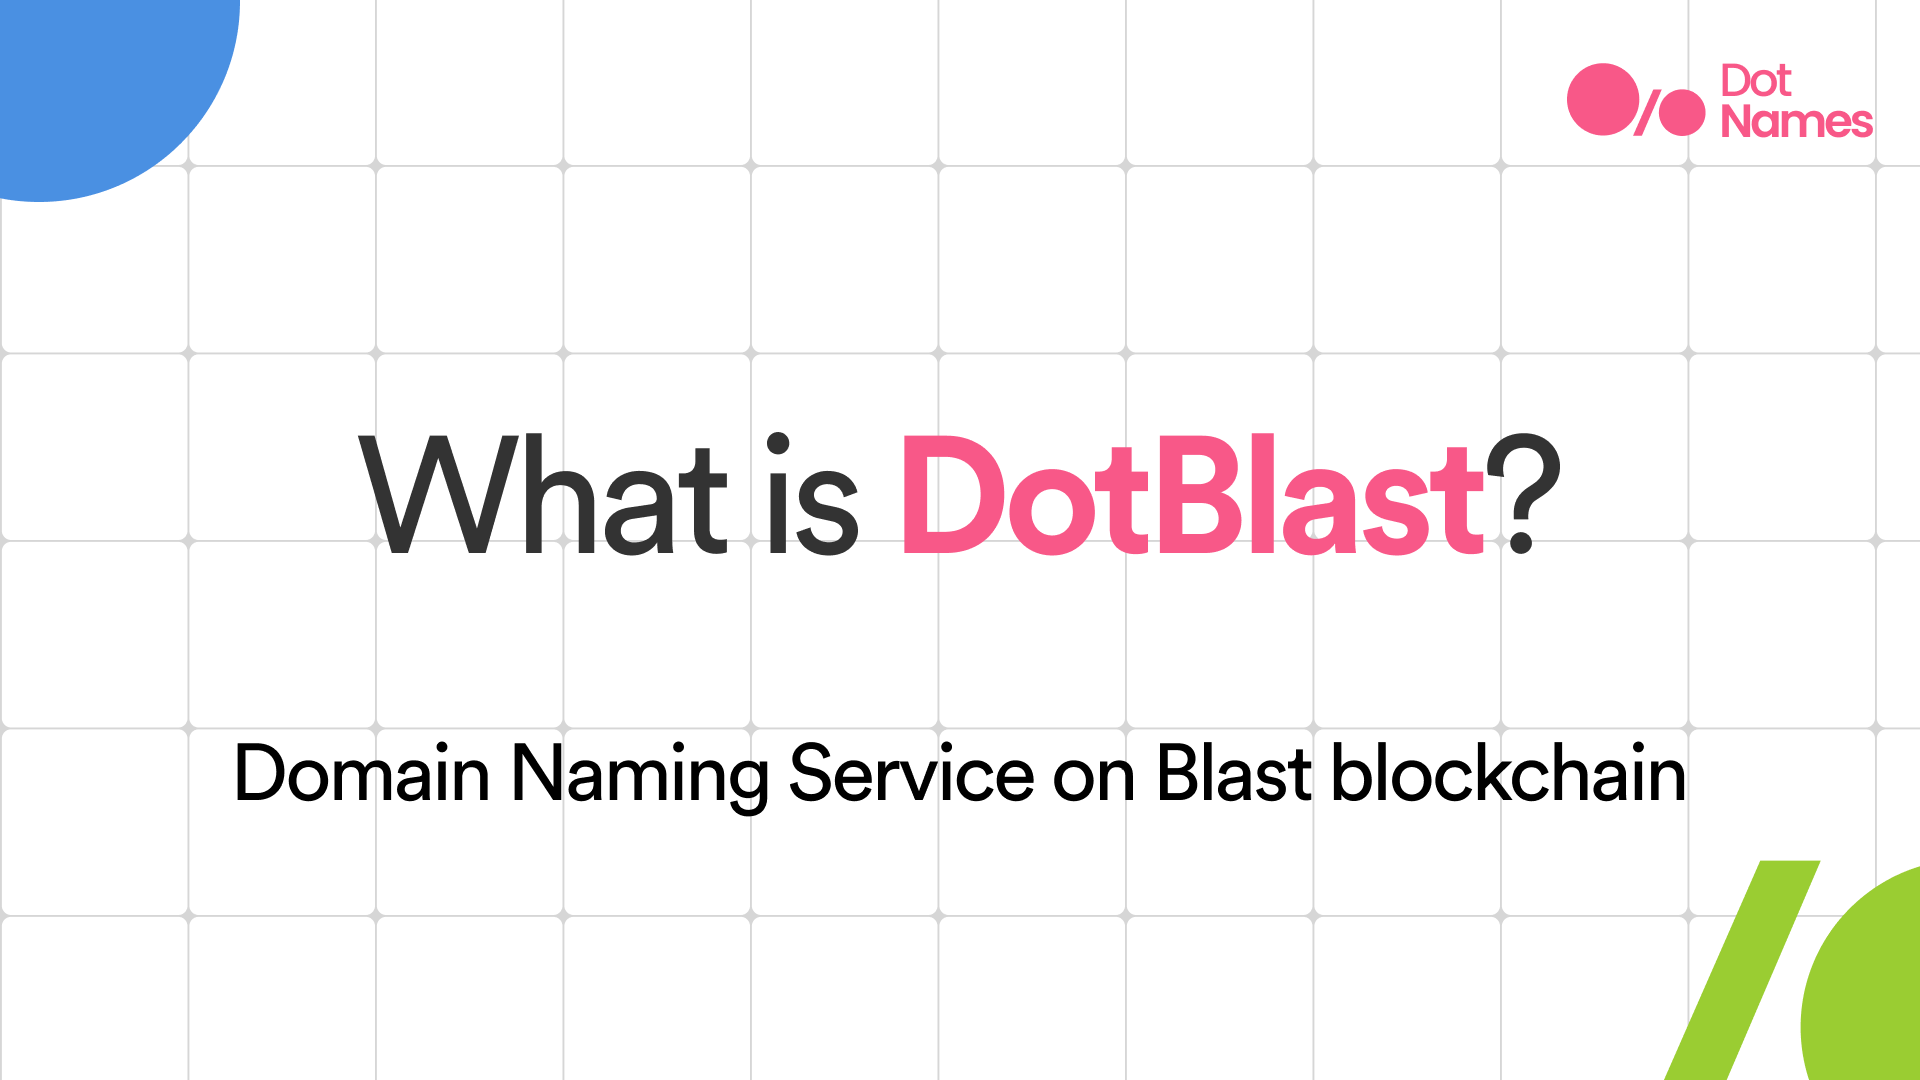 DotNames Takes Aim at Web3 Identity with DotBlast Launch on Blast